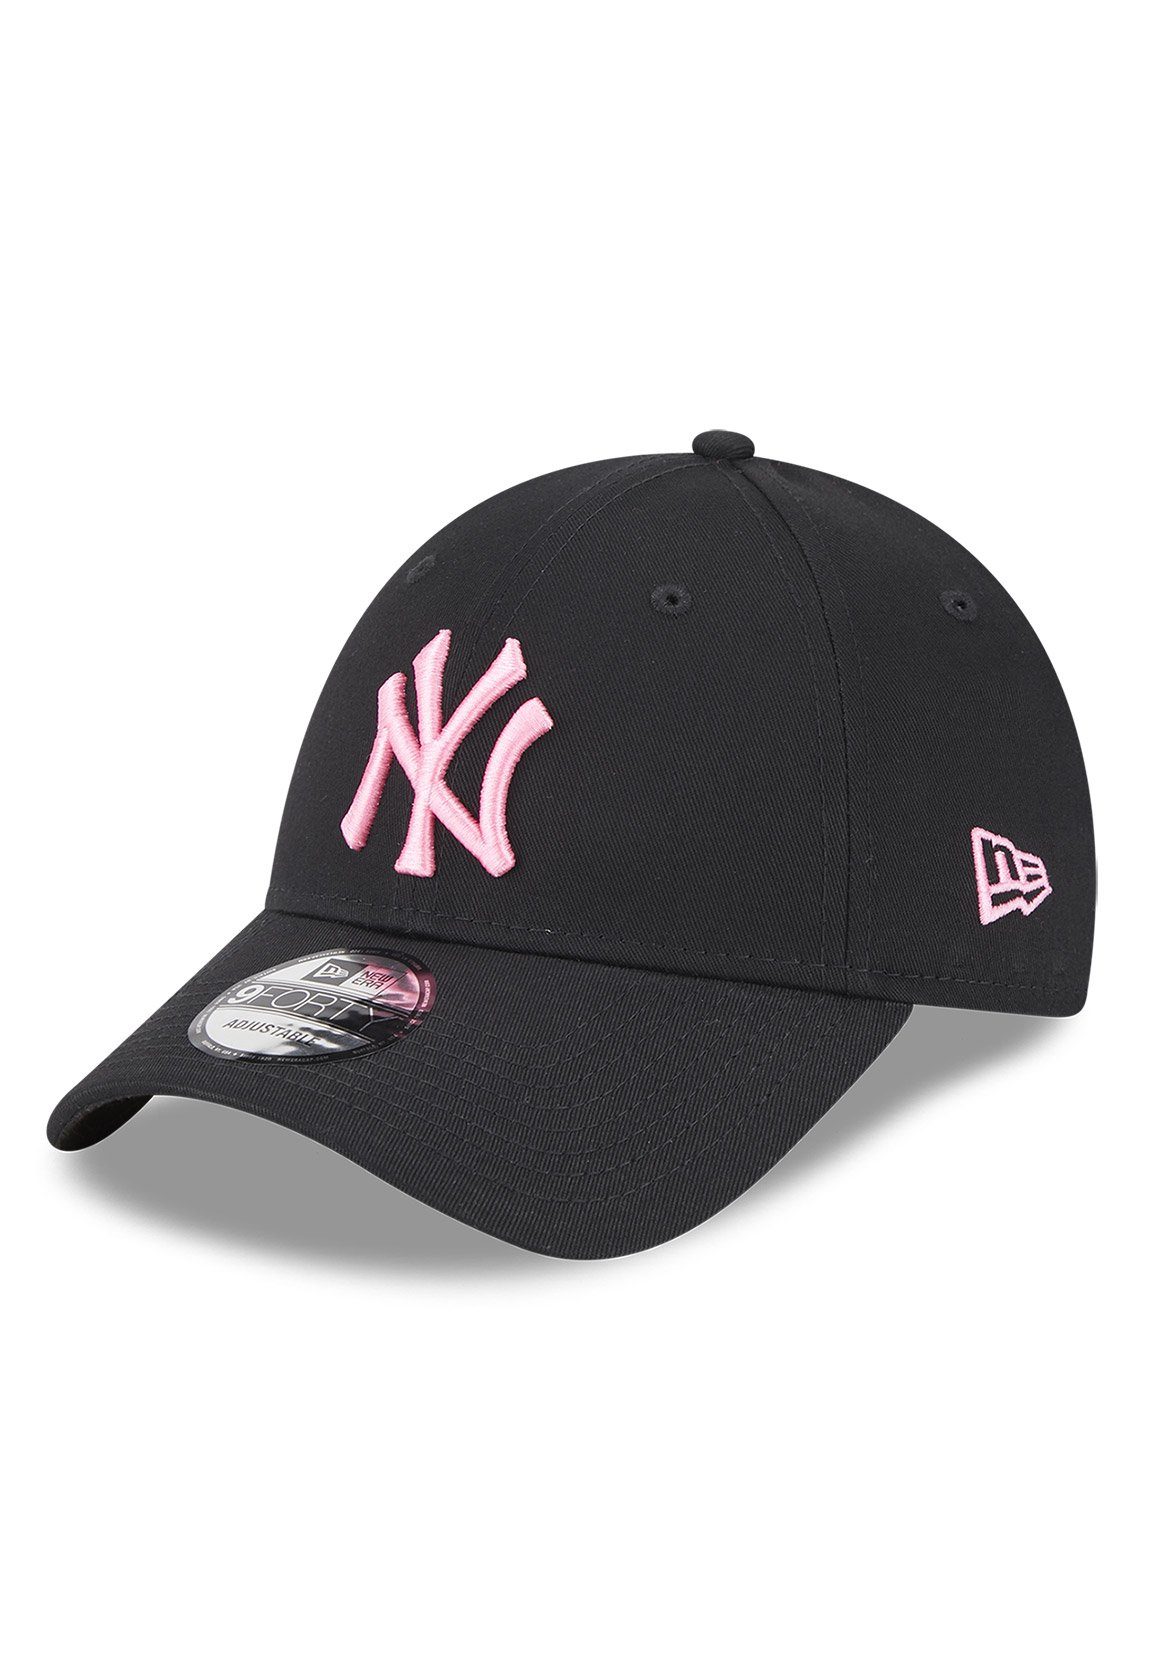 New Era Baseball Cap New Era Cap Pink YANKEES Schwarz 9Forty Adjustable schwarz-pink Neon NY